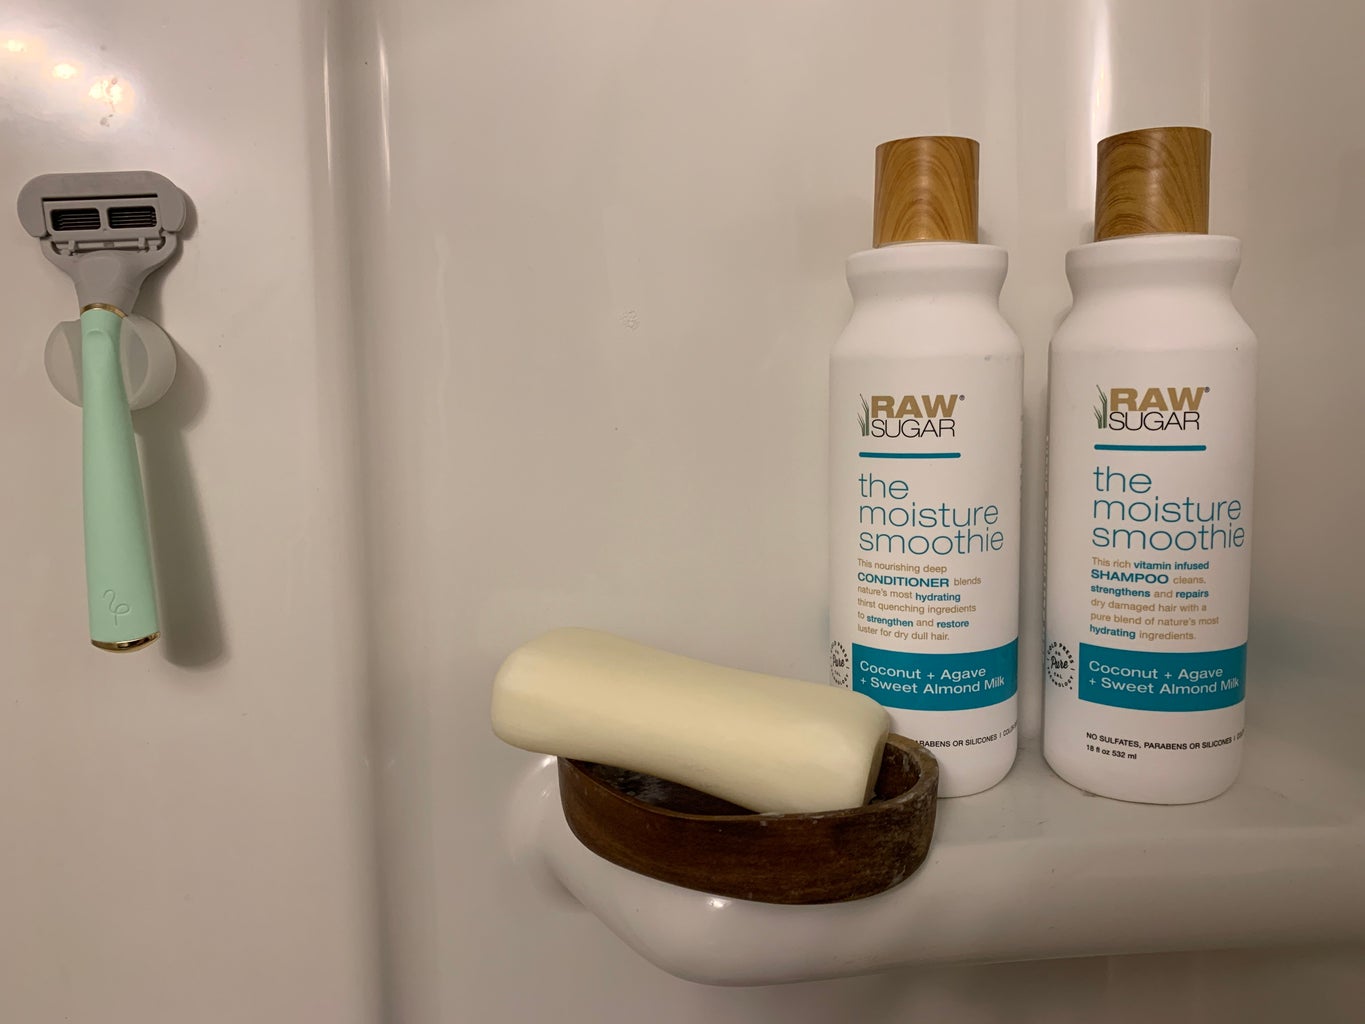 Shampoo, conditioner, bar of soap and razor in shower